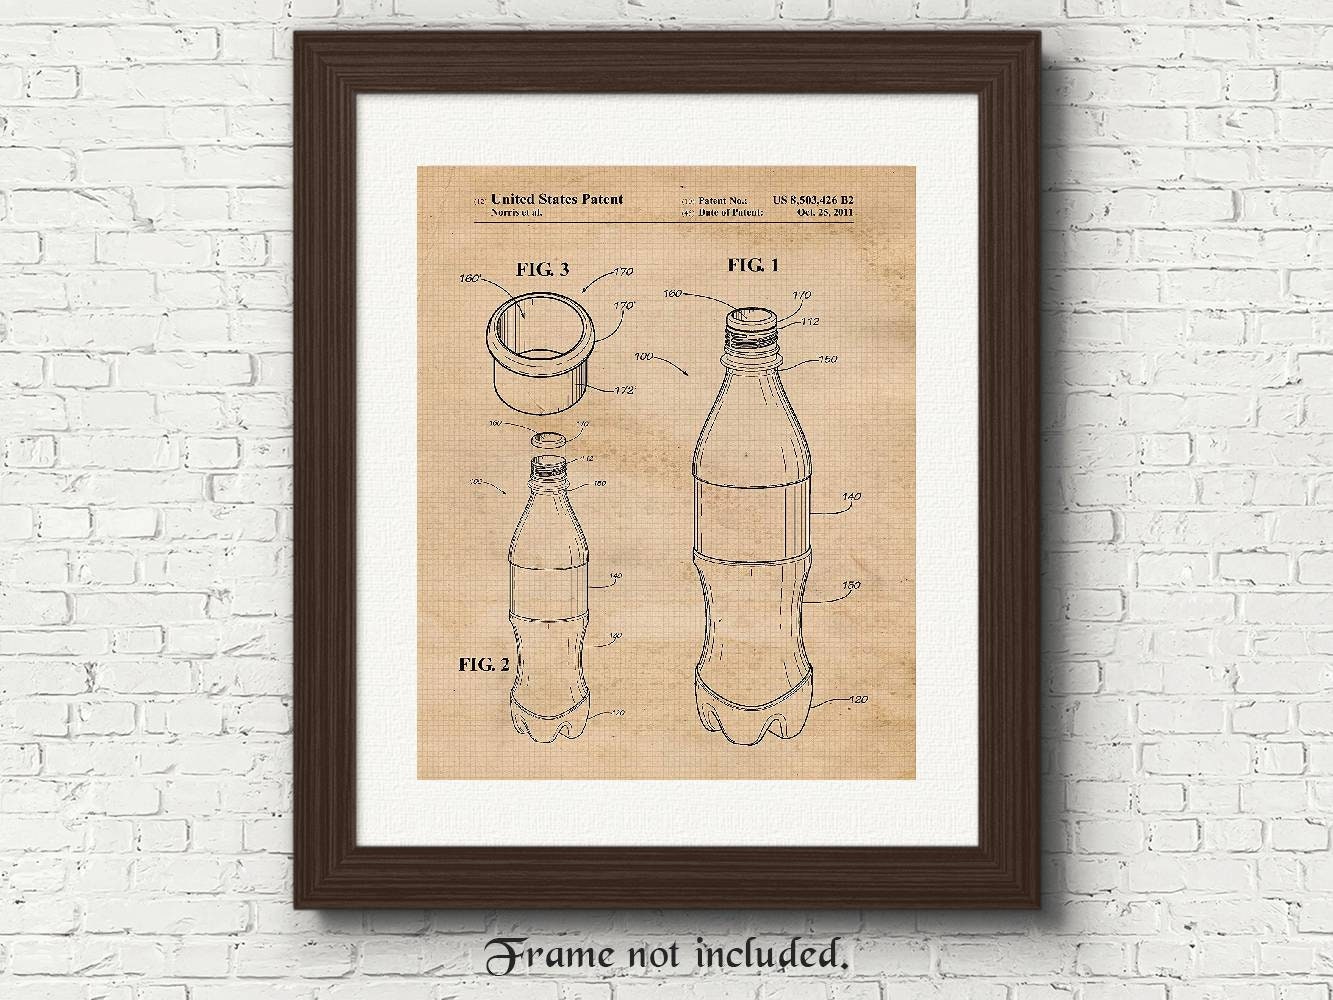 Vintage Coke Coca Cola Bottle Patent Poster Prints, 1 Unframed Photos, Wall Art Decor for Home Office Man Cave, Student, Teacher, Soda Fan